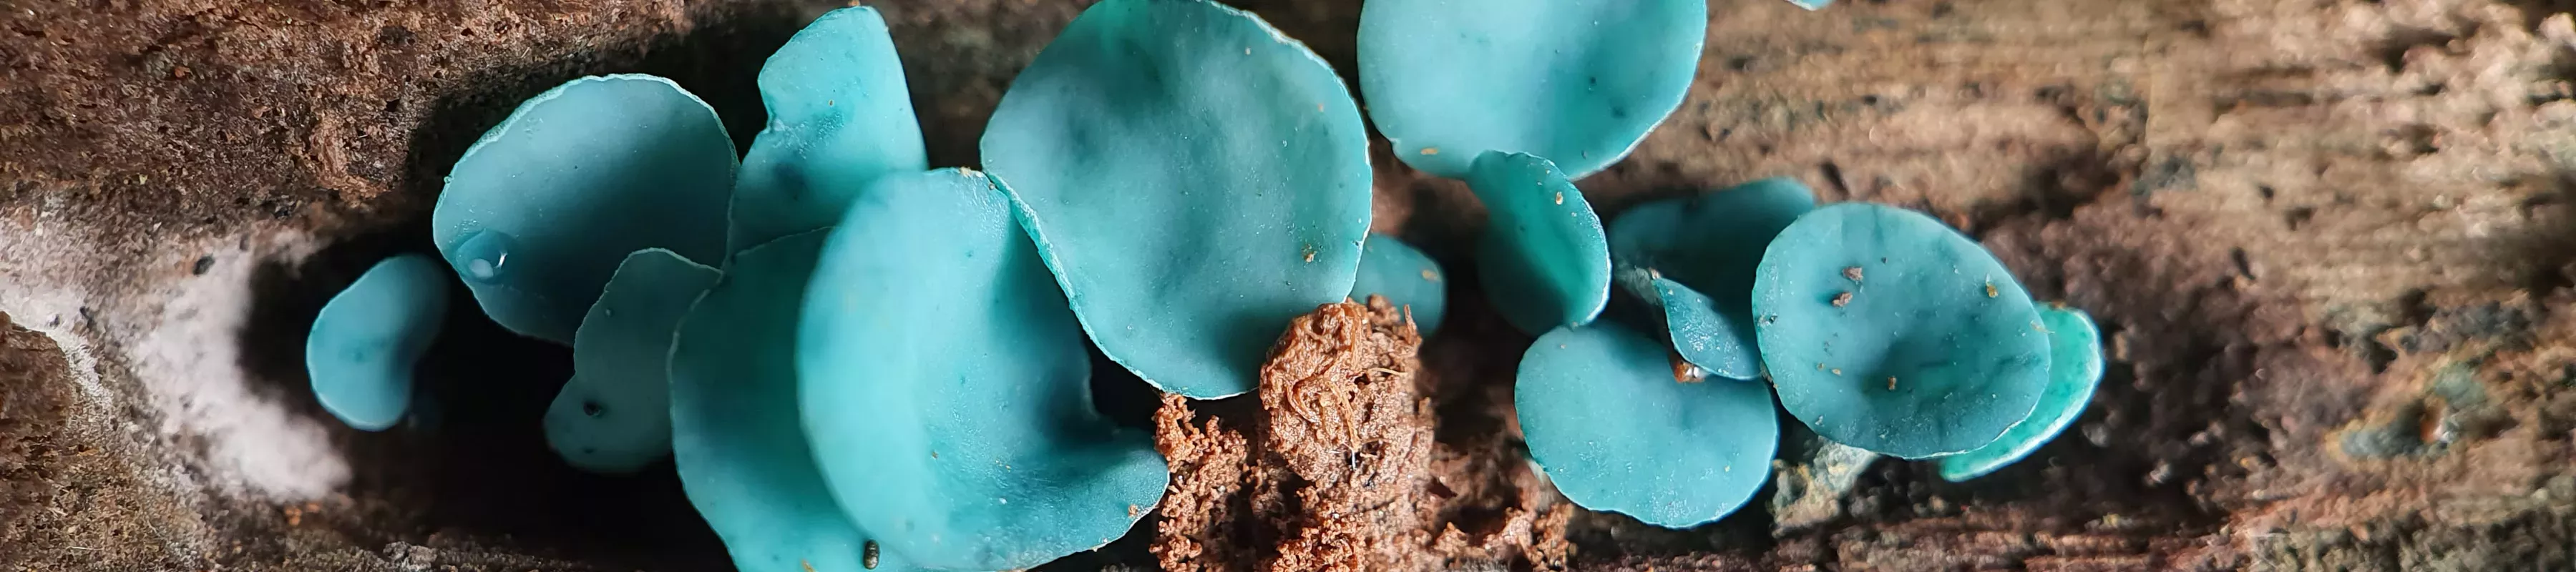 Small delicate petal-like blue fungi on a log